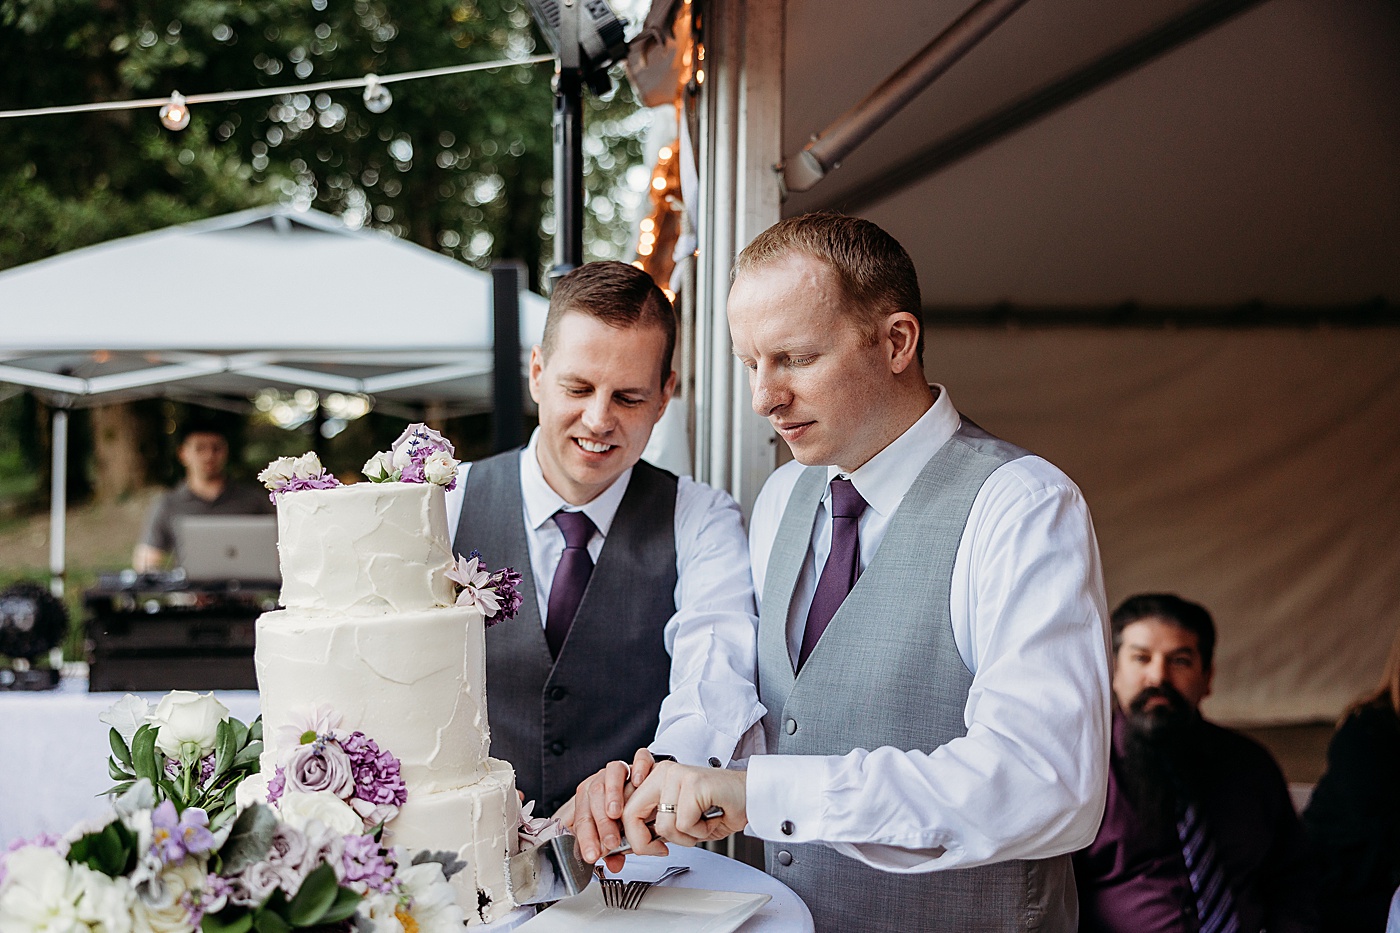 Grooms cutting wedding cake | Megan Montalvo Photography